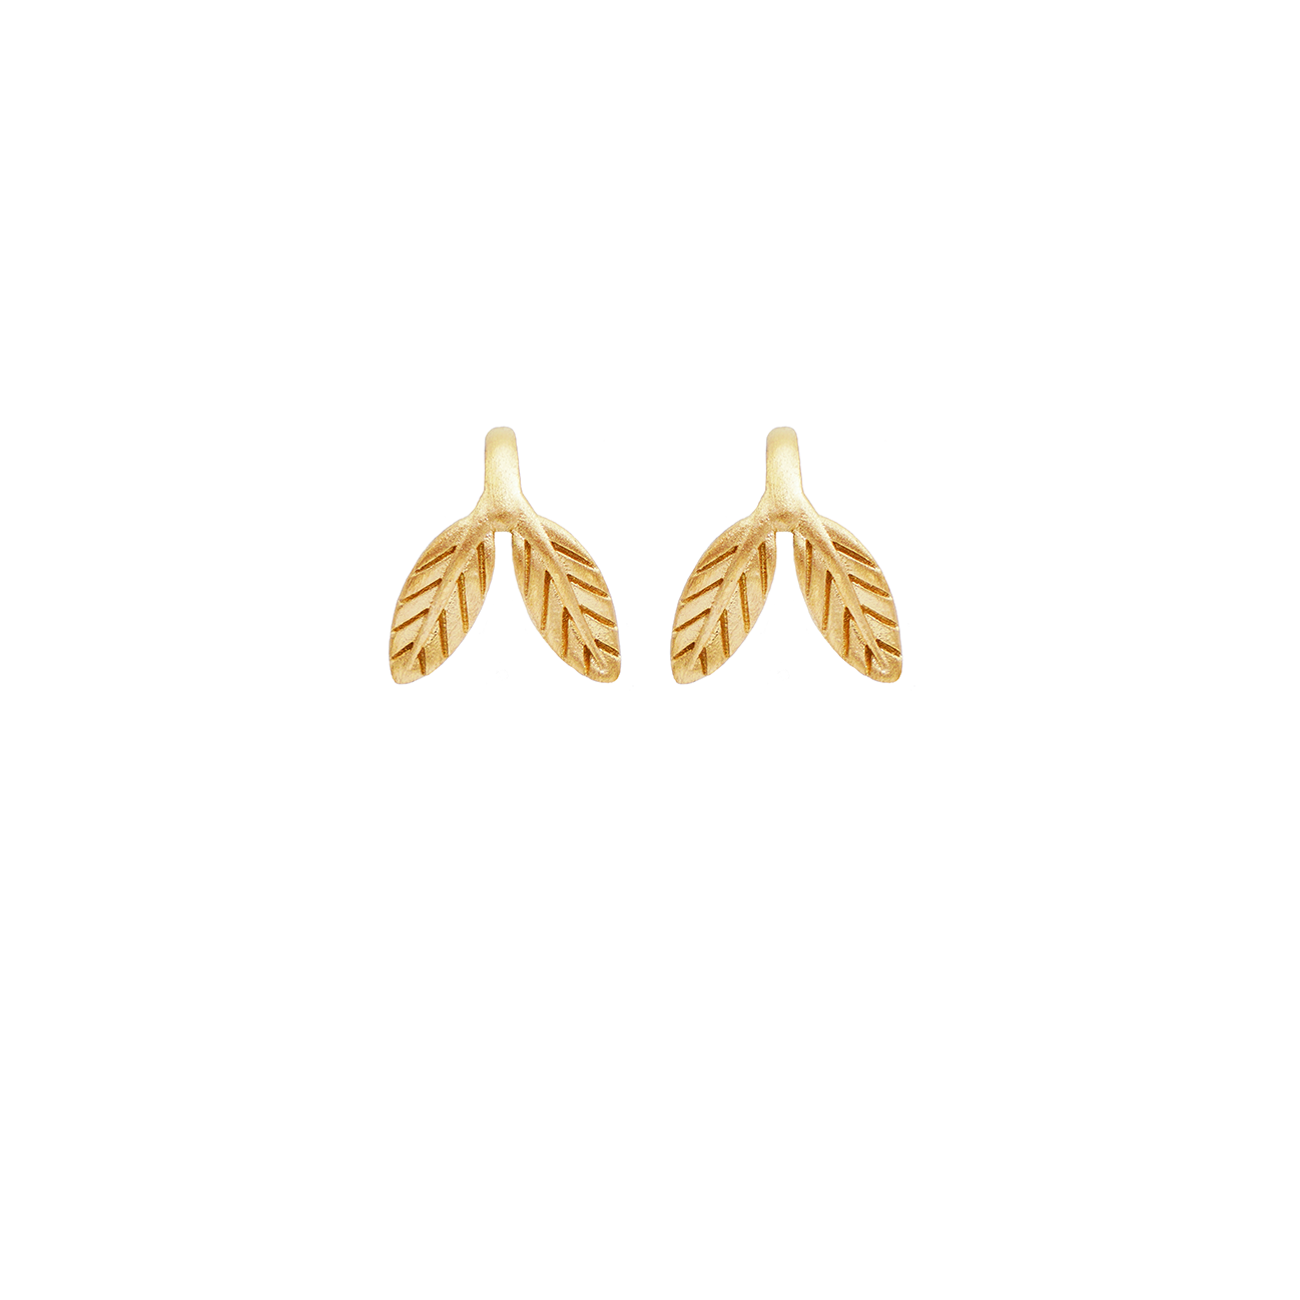 Tiny leaf earrings